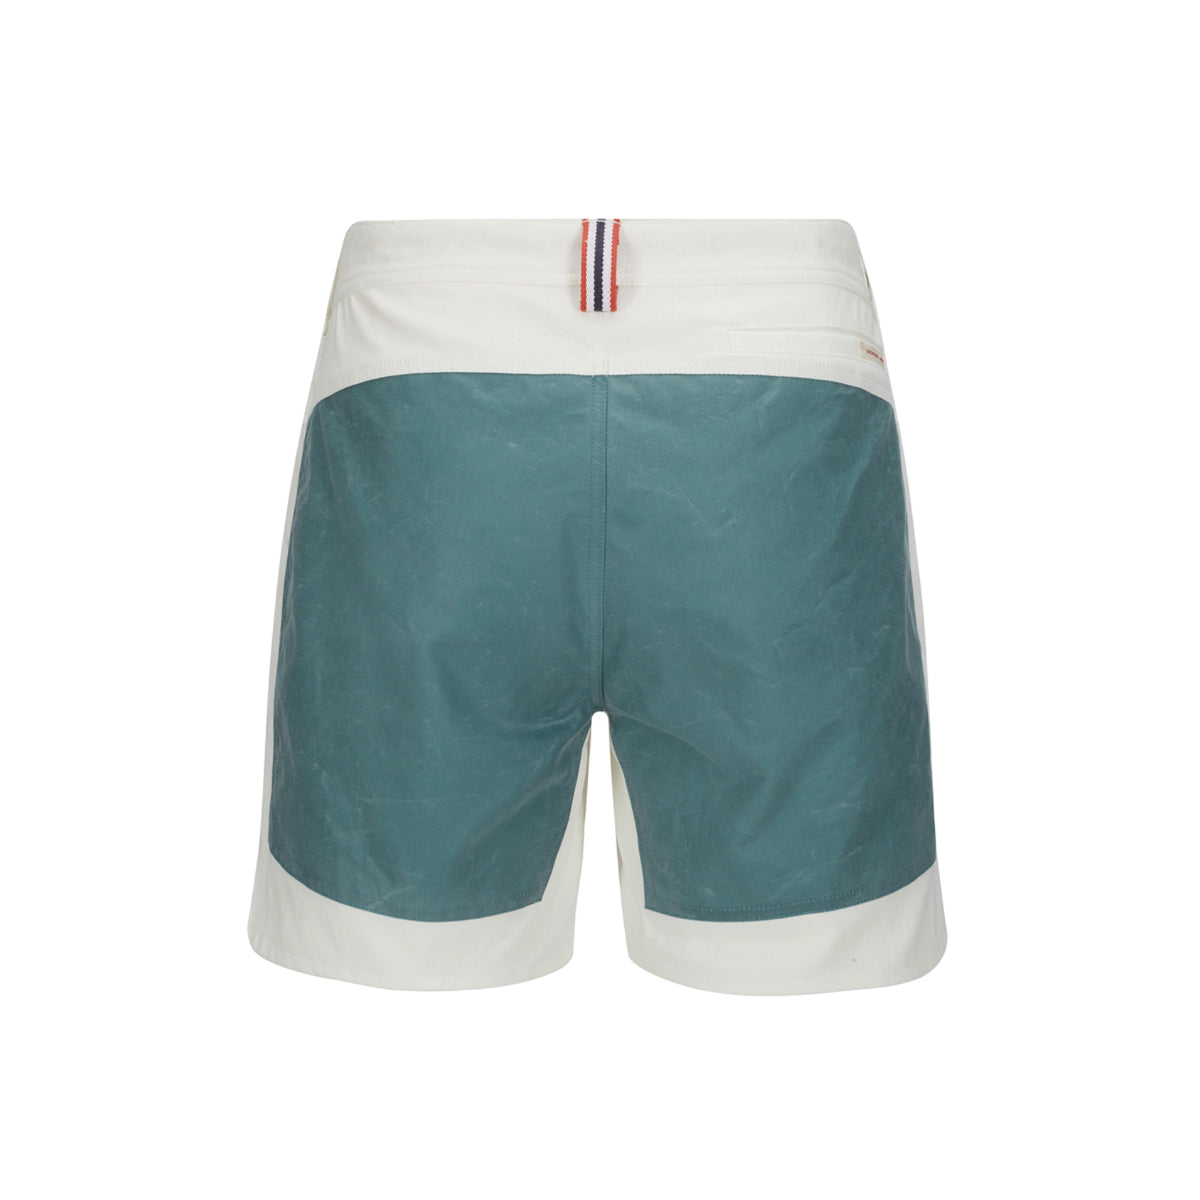 Amundsen Sports - Men's 7 Incher Field Shorts - Offwhite / Stormy Blue